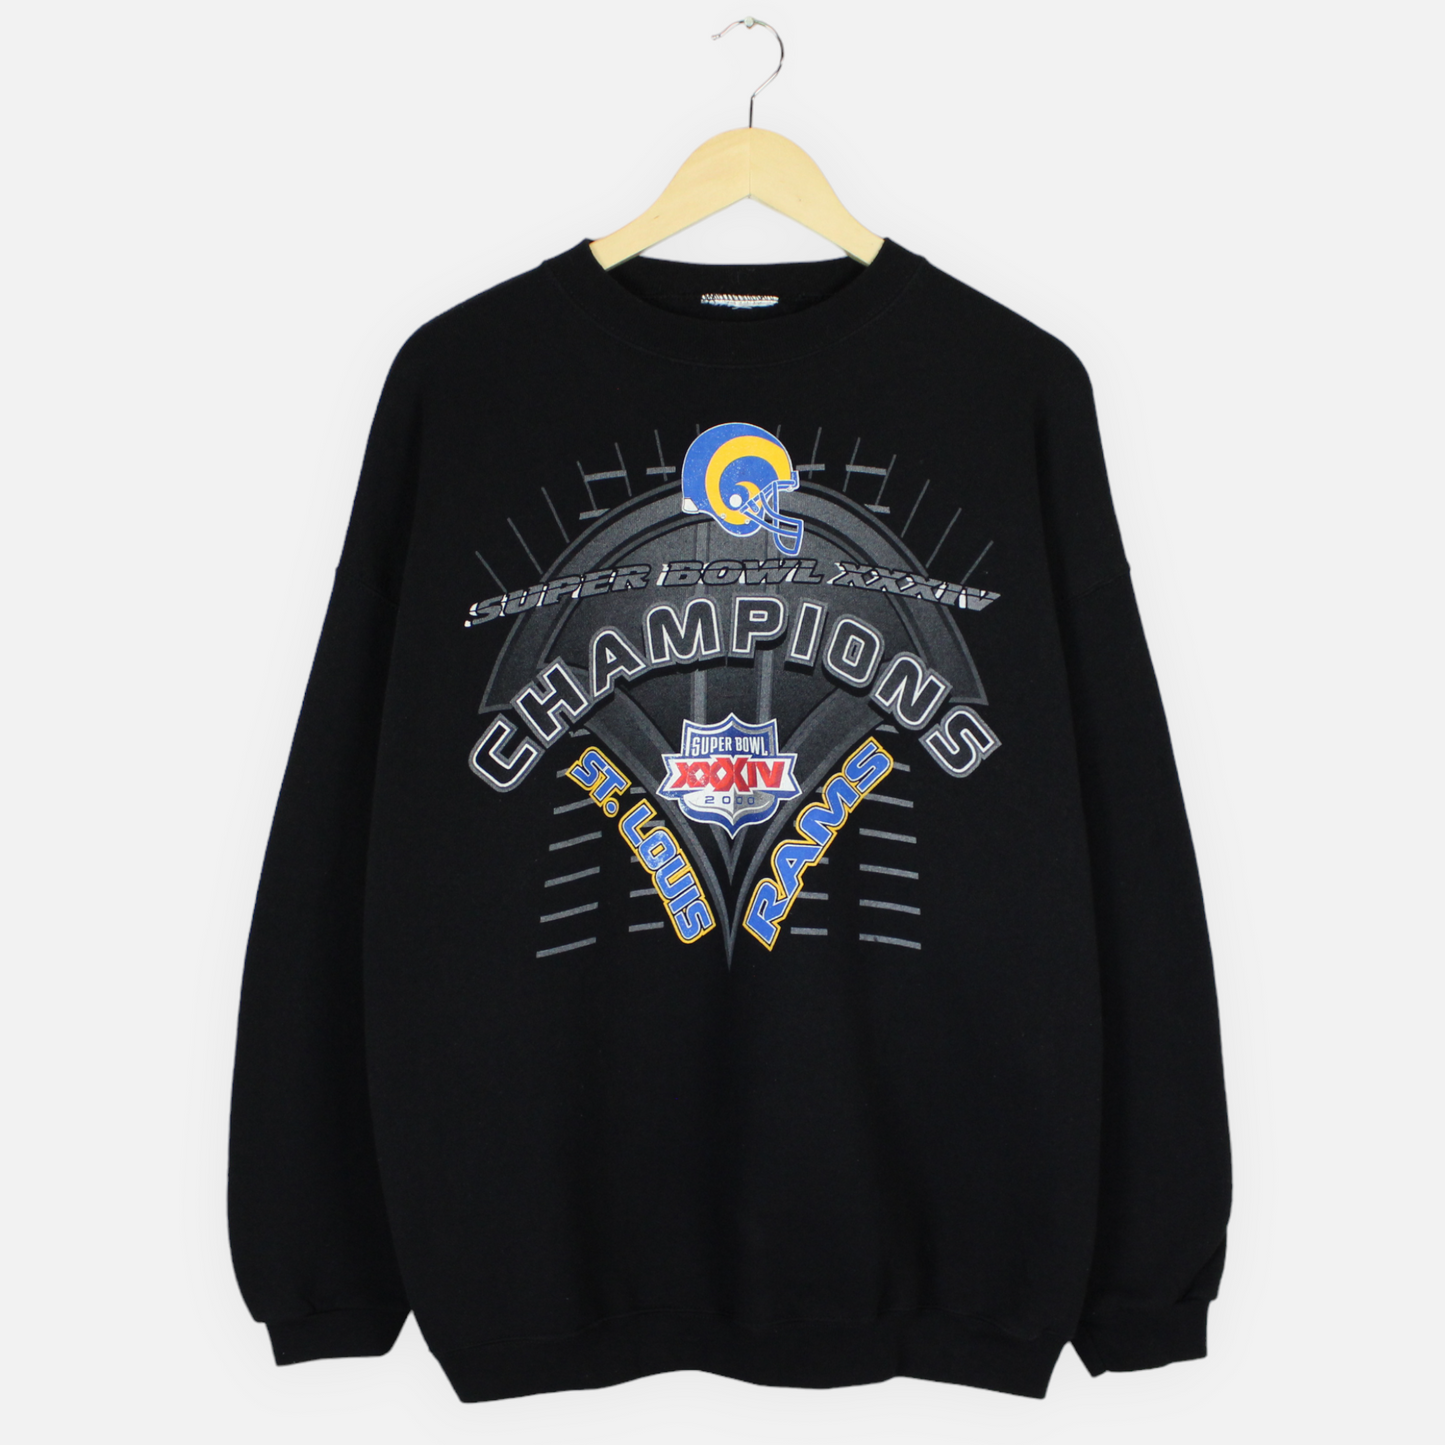 Vintage 2000 St Louis Rams NFL Sweatshirt - L